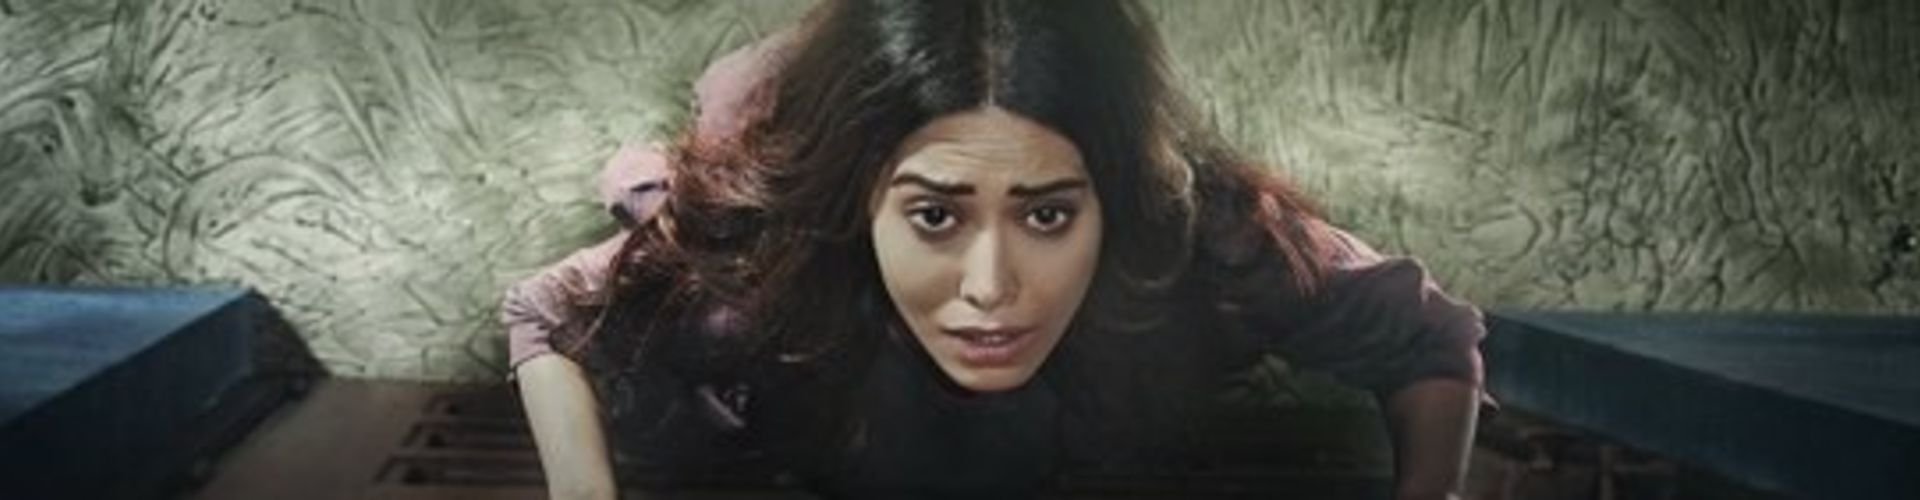 Chhorii Trailer Out Tomorrow Confirms Nushrratt Bharuccha